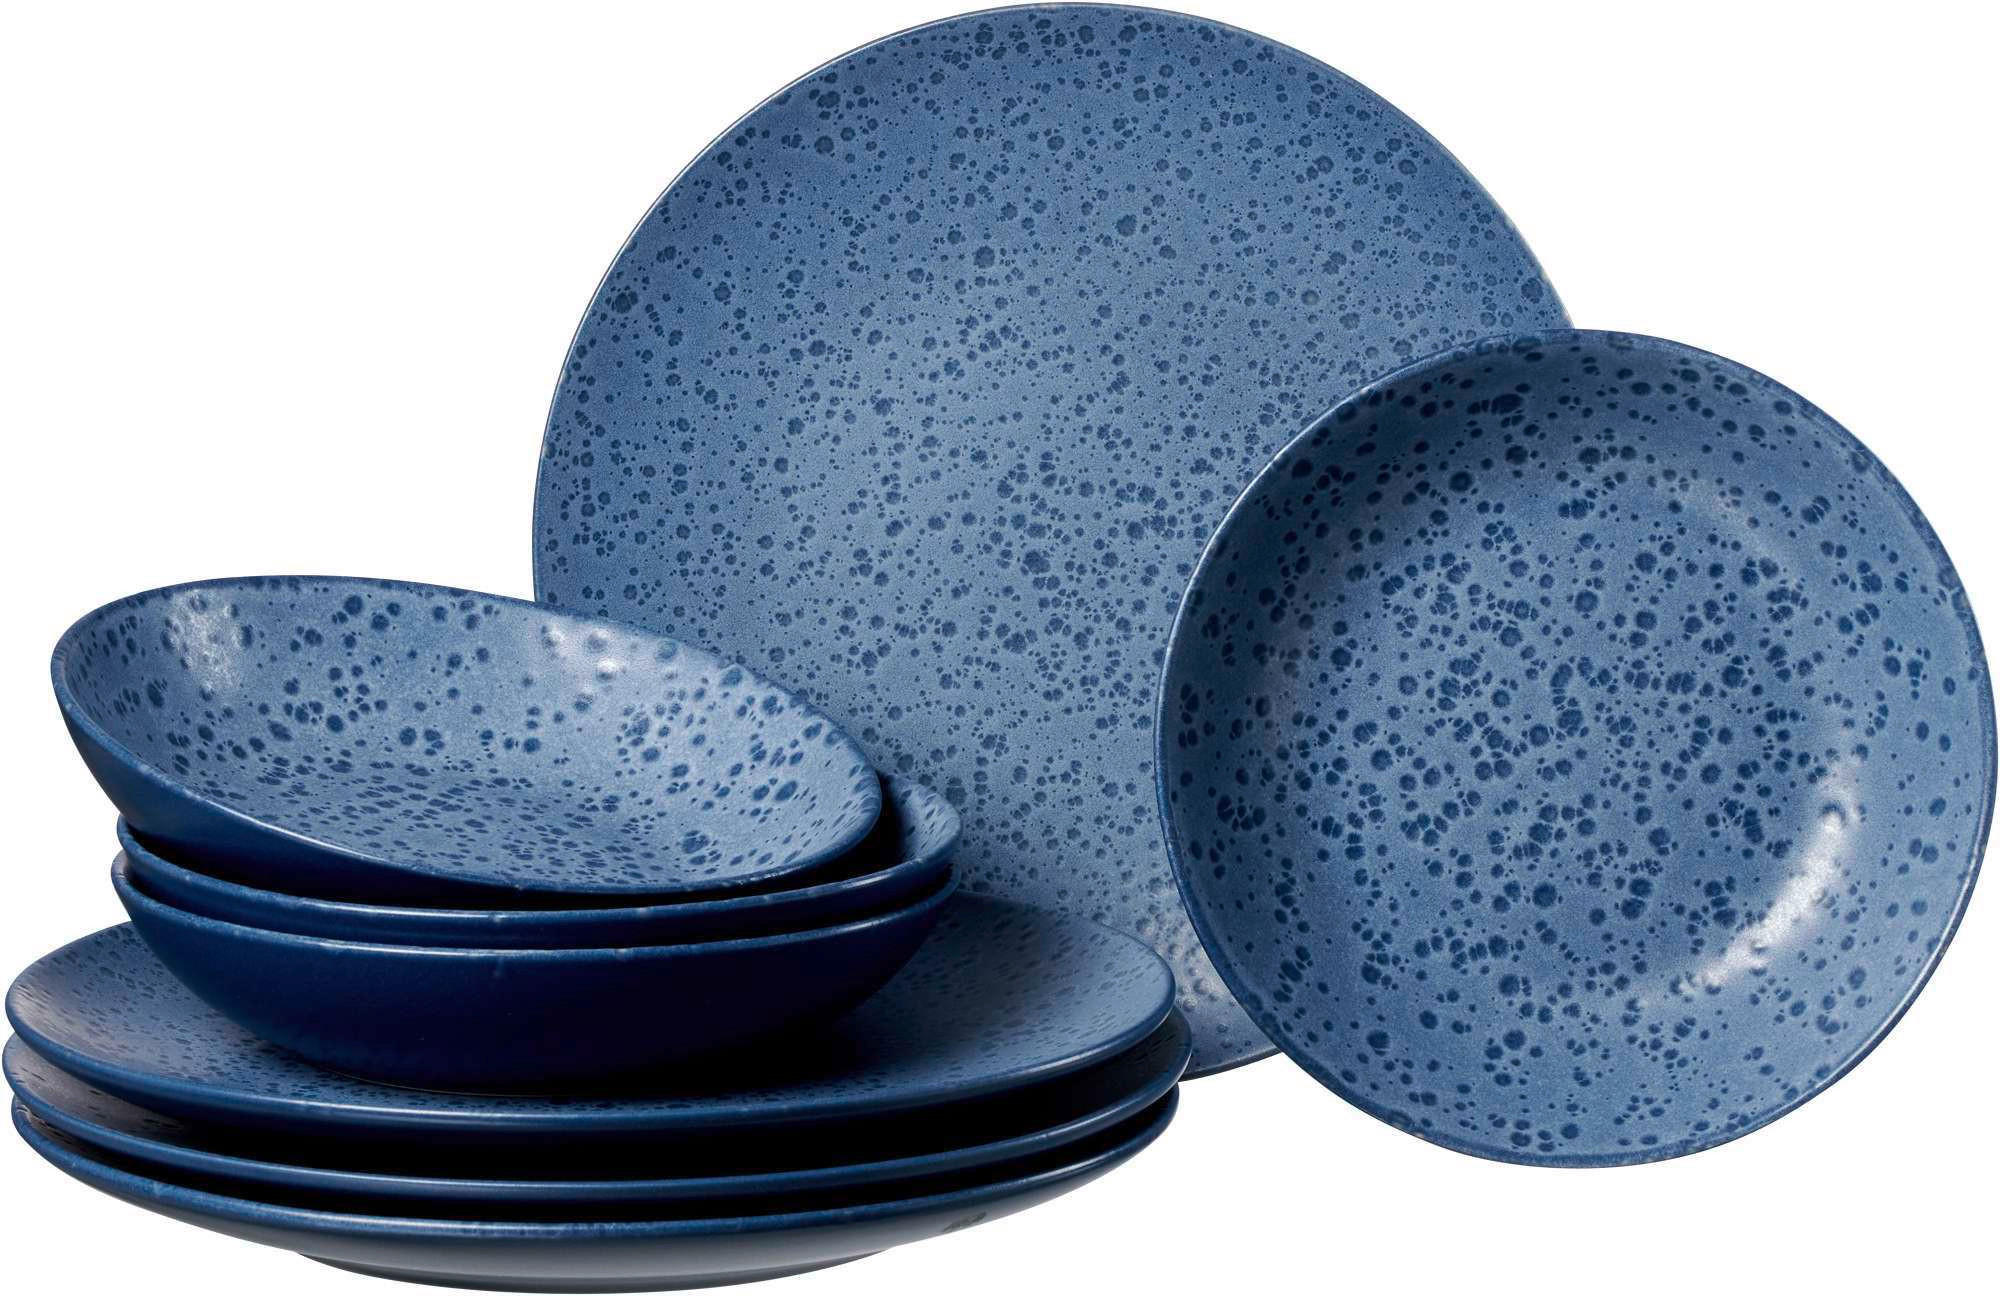 TAFELSERVICE KITWE  8-teilig  - Blau, Trend, Keramik (29/17/29cm) - Ritzenhoff Breker